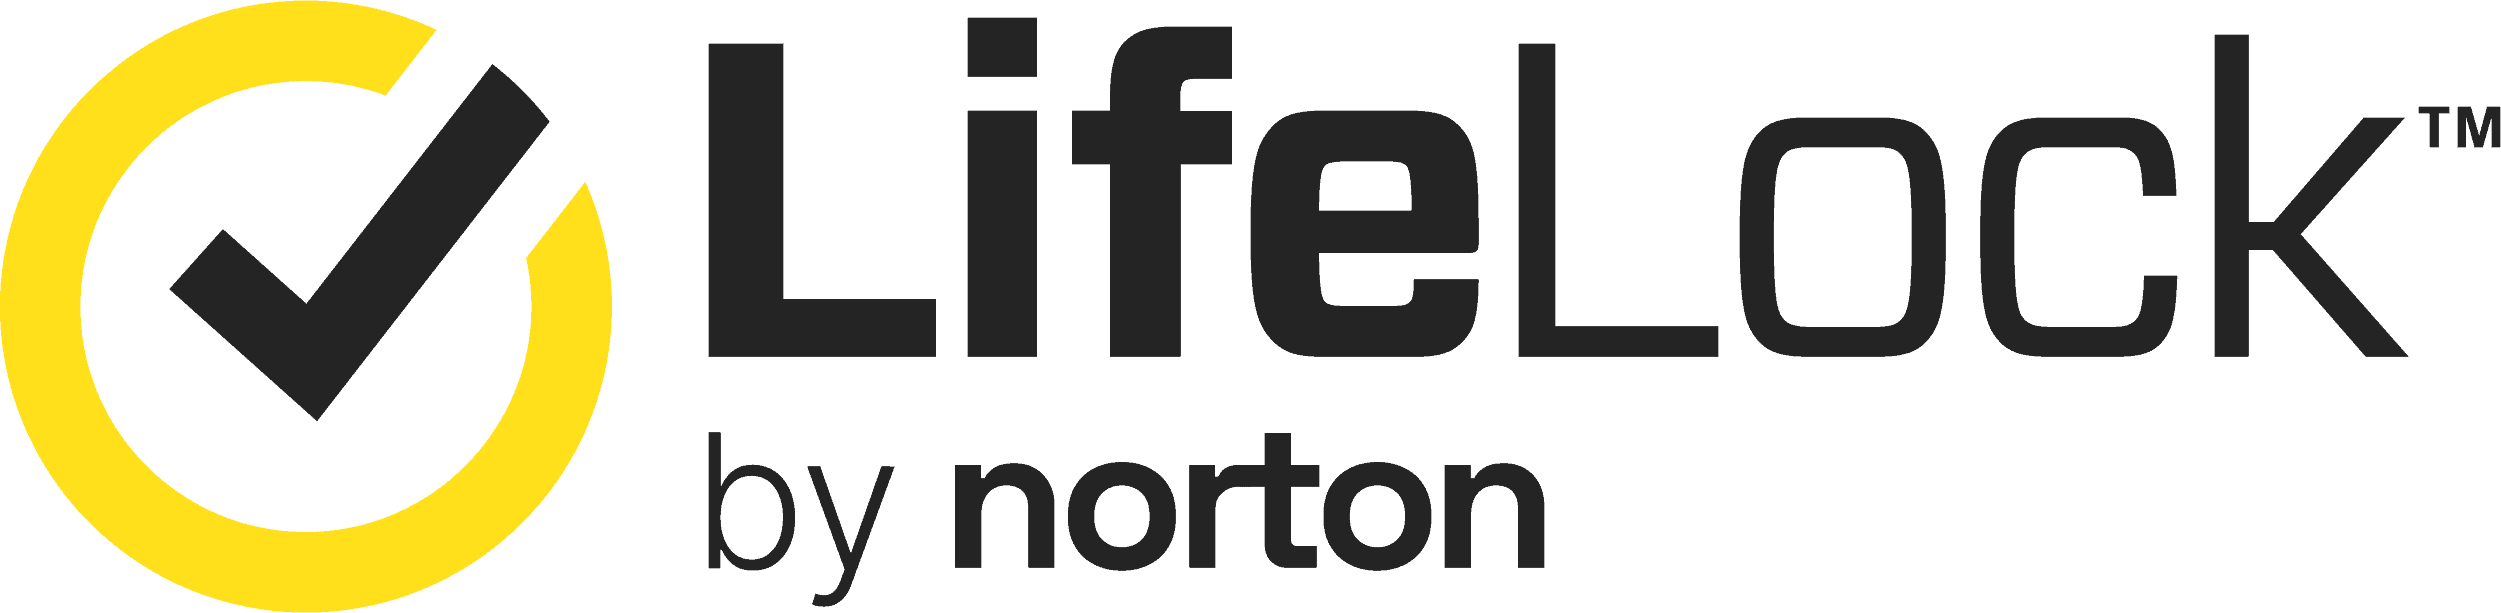 LifeLock - logo produktu